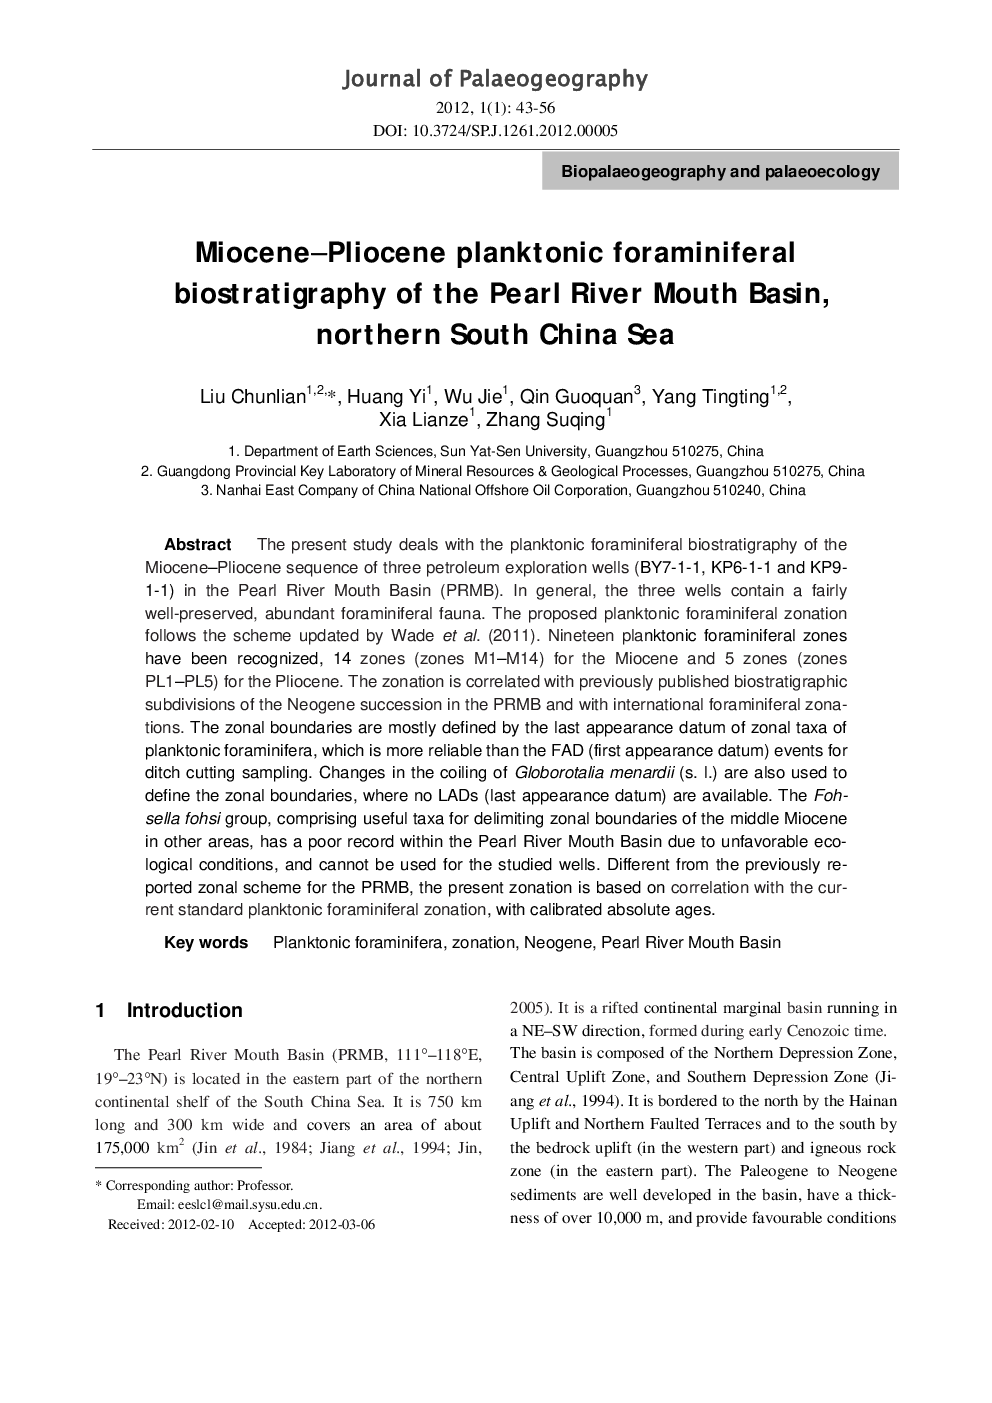 Miocene–Pliocene planktonic foraminiferal biostratigraphy of the Pearl River Mouth Basin, northern South China Sea